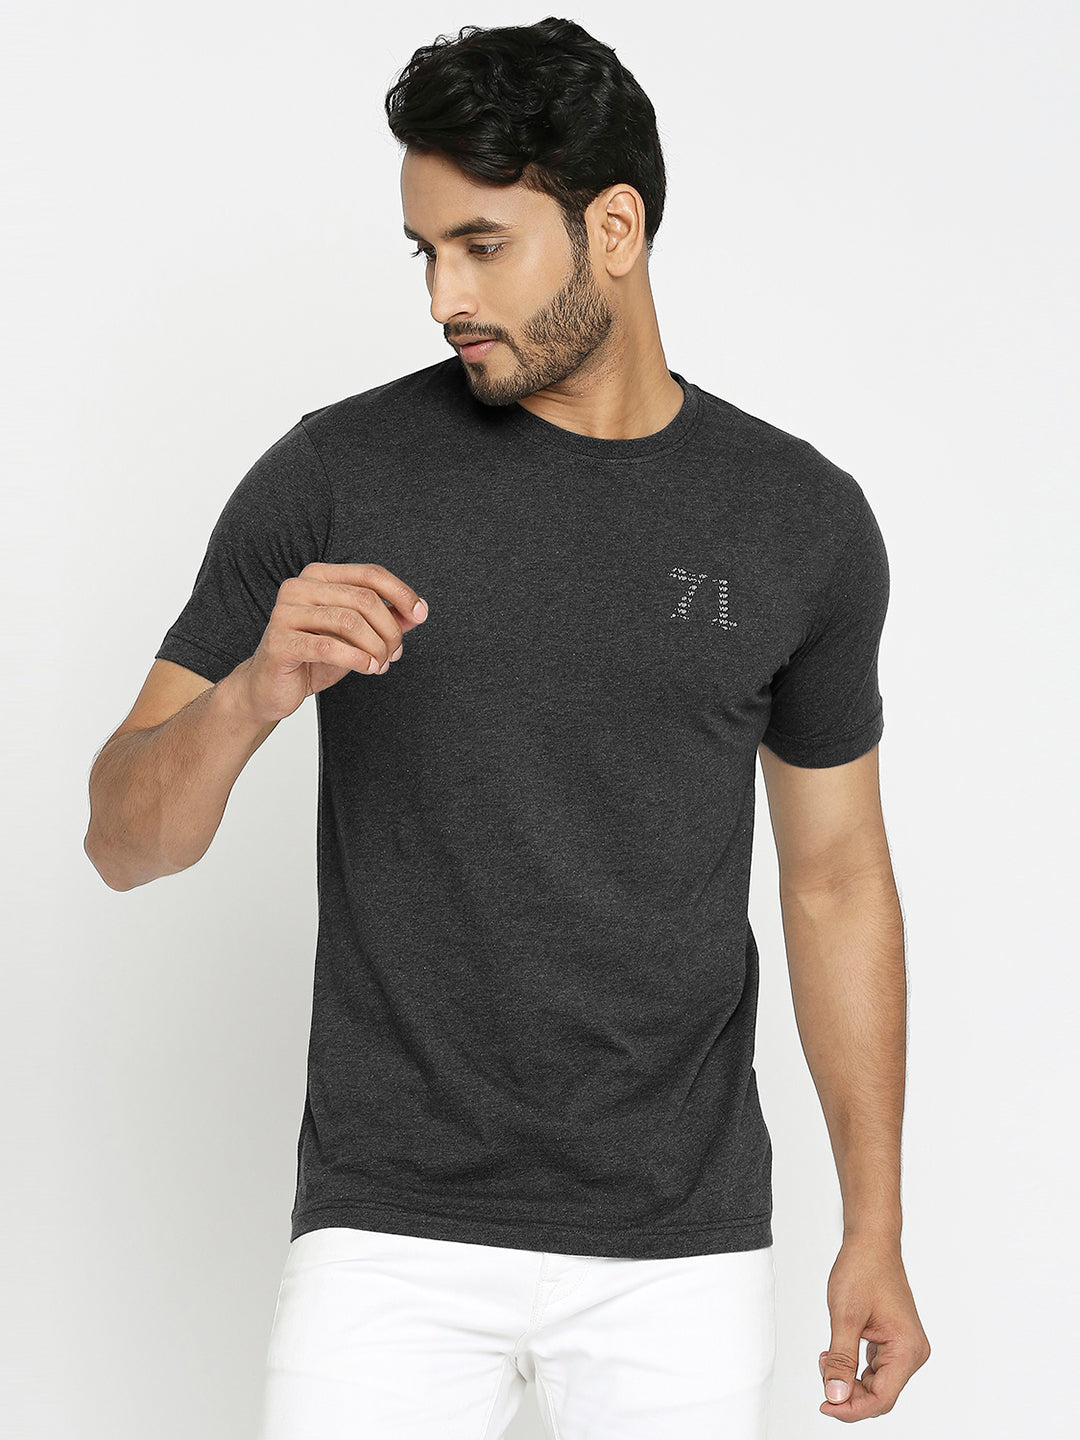 Charcoal Melange Everyday Essential Cotton T-Shirt for Men